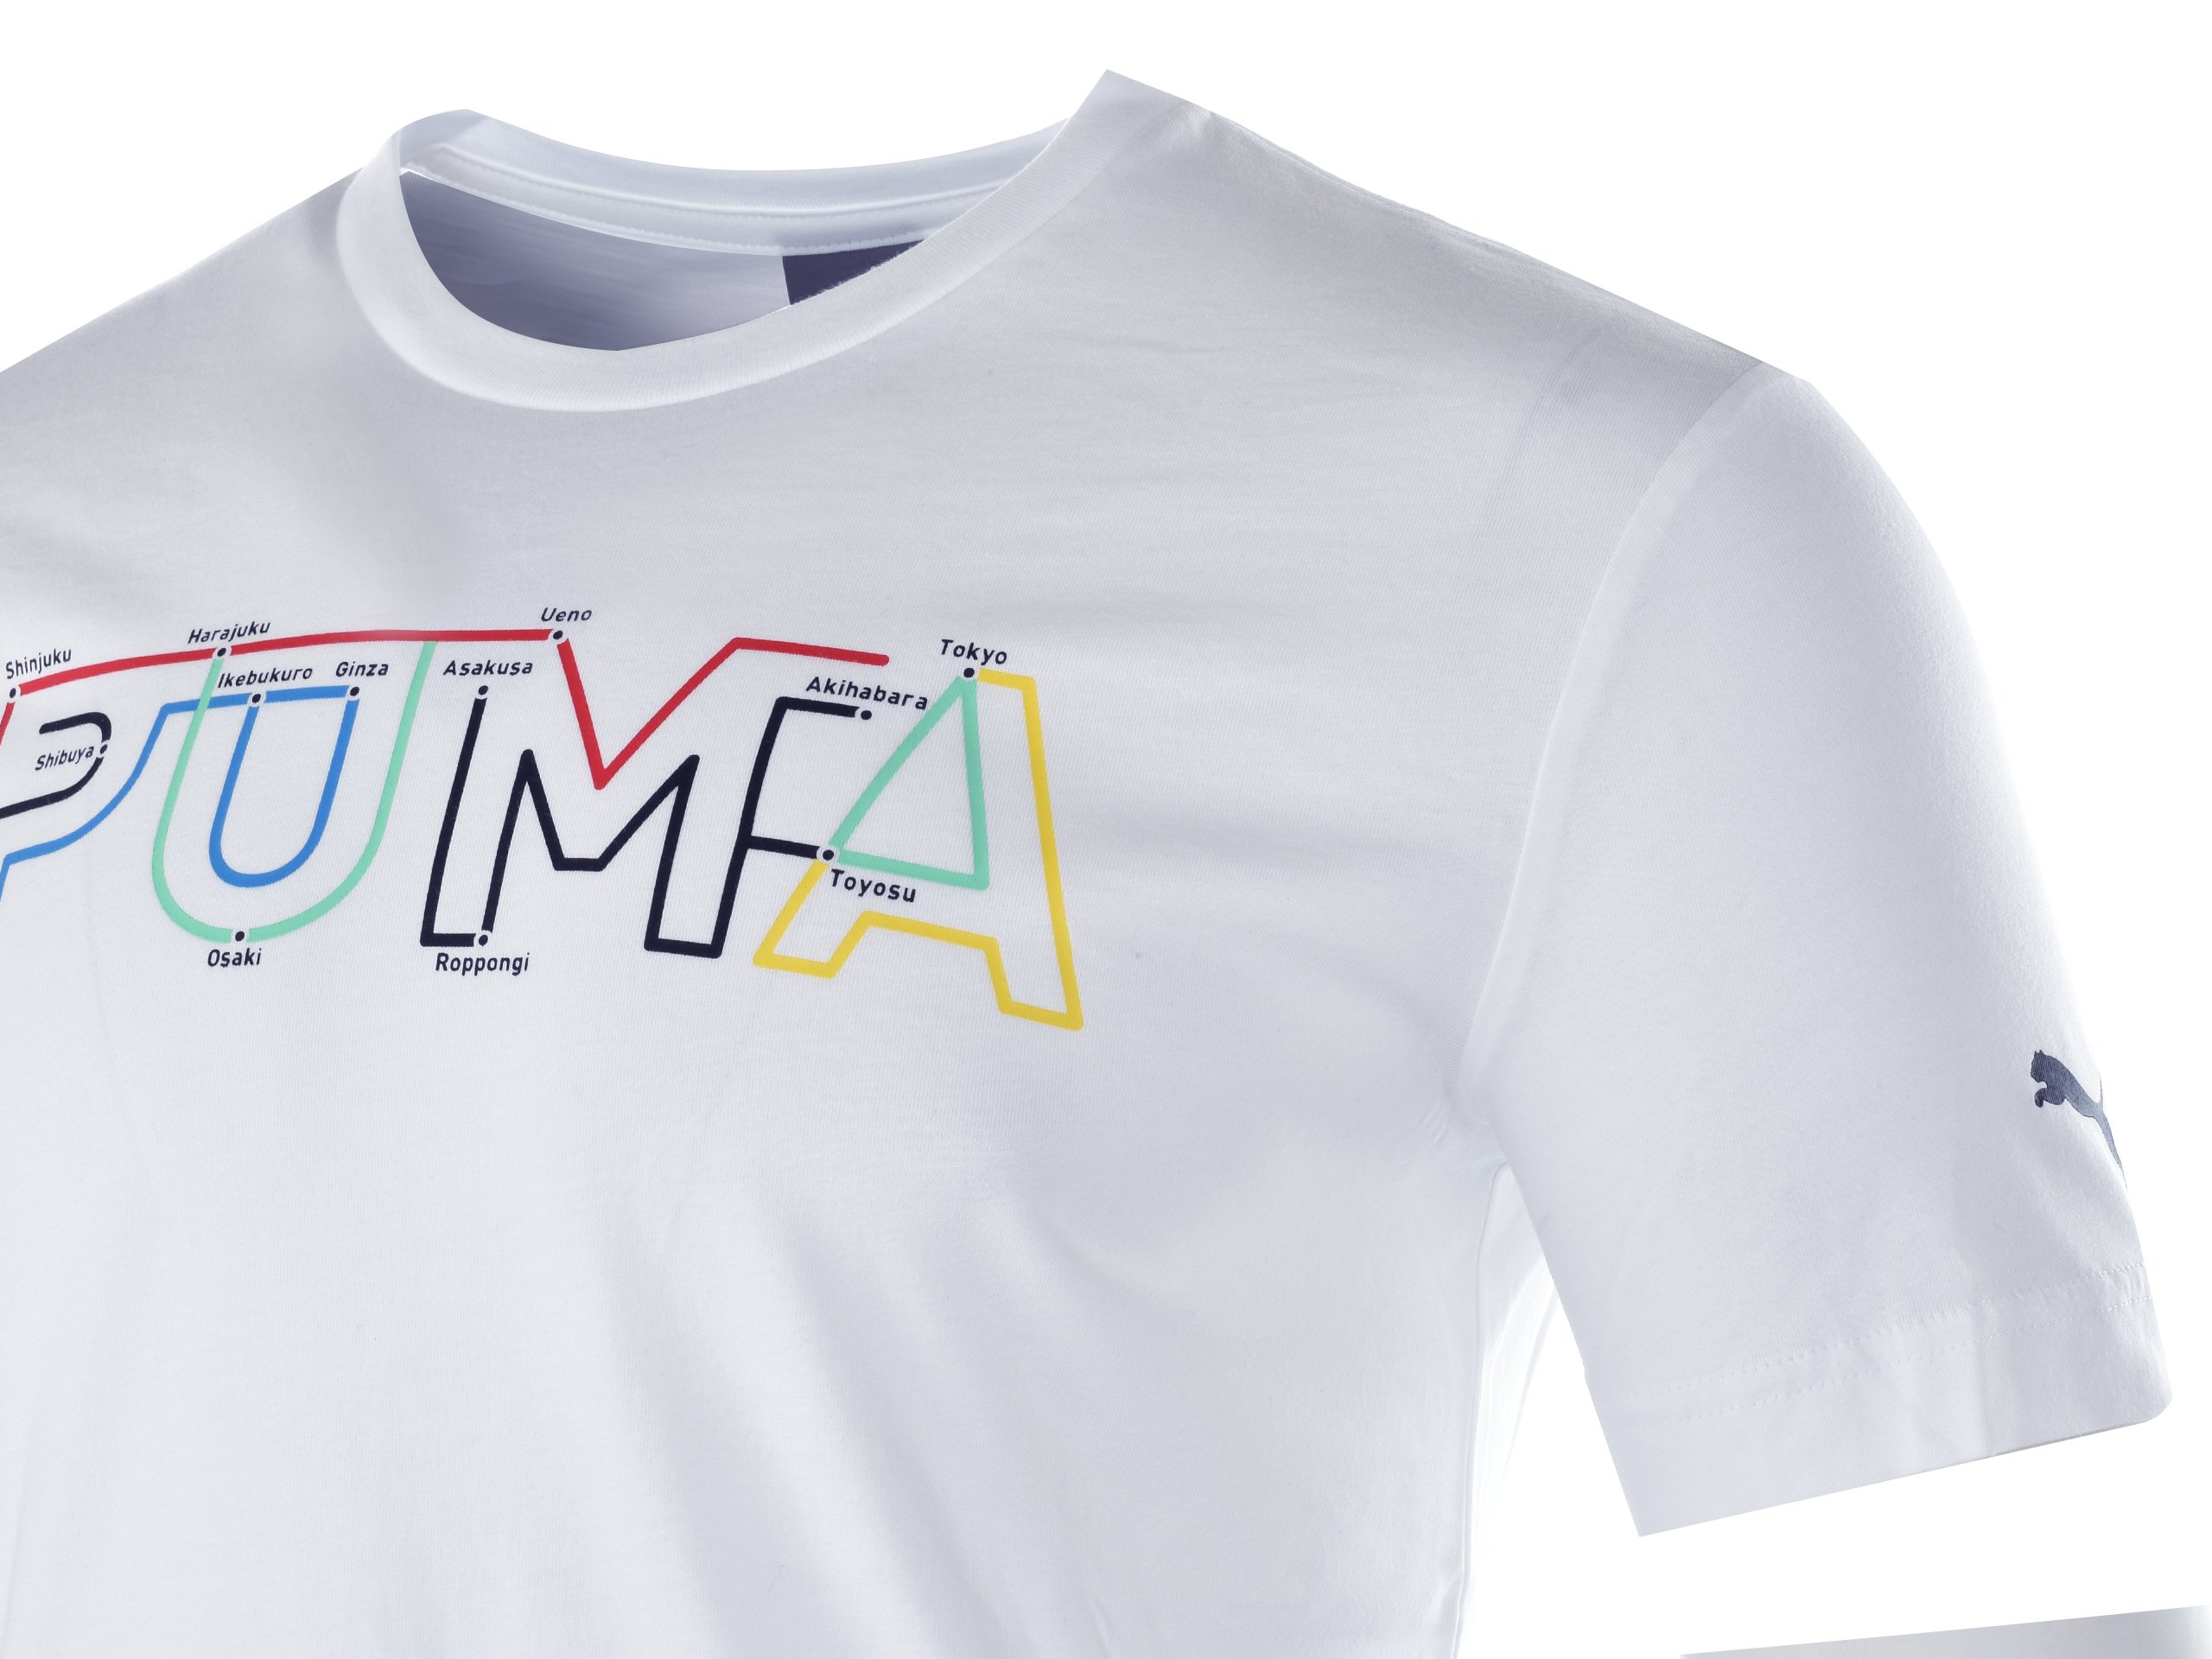 Kicks - a | trusted - Mens White Puma - - Sport supplier | Graphic T-shirt \\ sports of 584712-02 branded footwear Puma